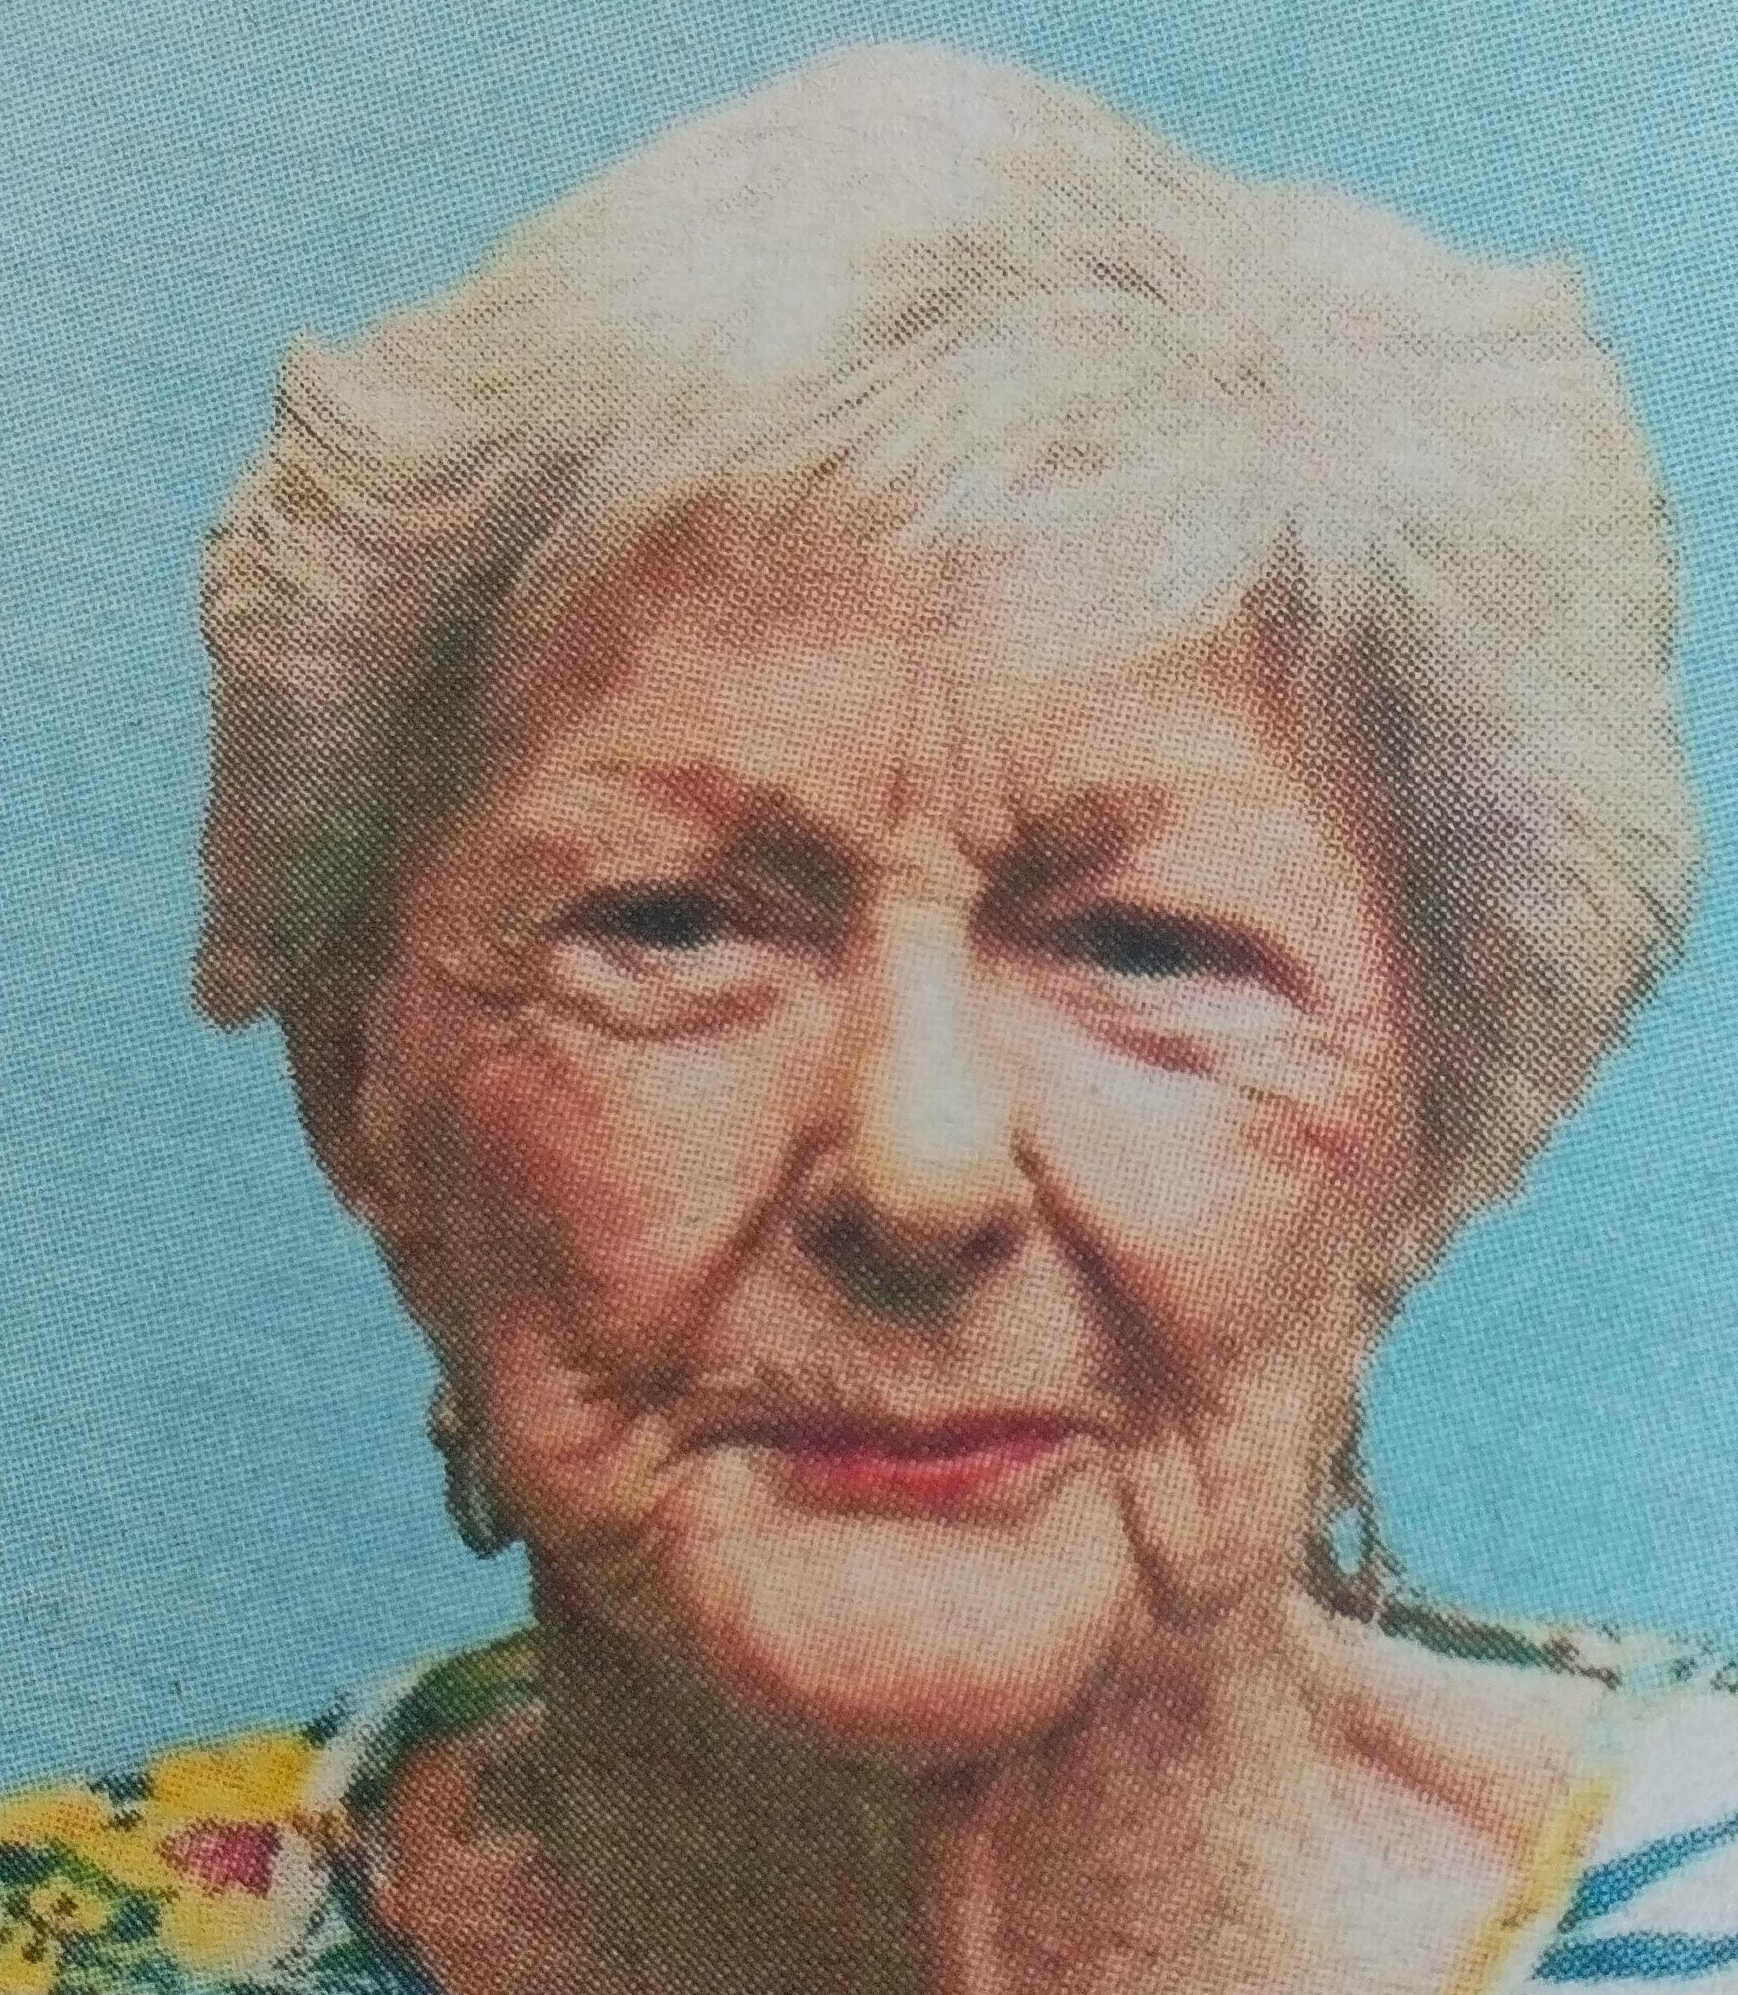 Obituary Image of June Olive Davies